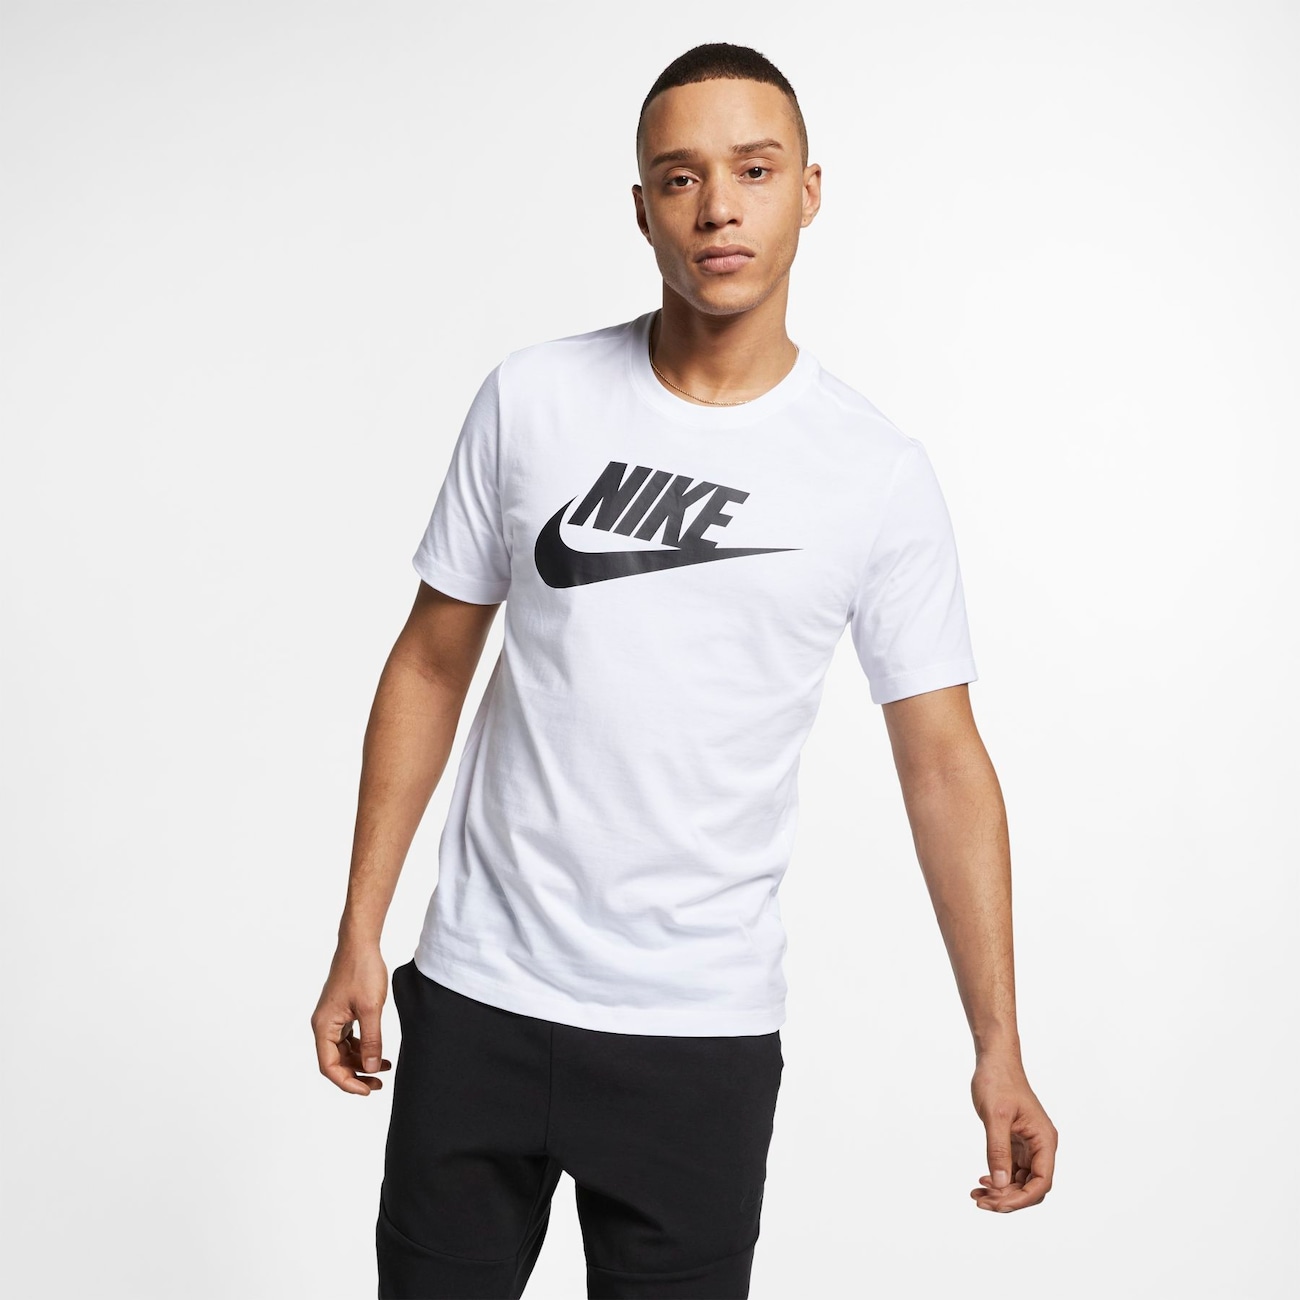 Camiseta Nike Sportswear Icon Futura Masculina